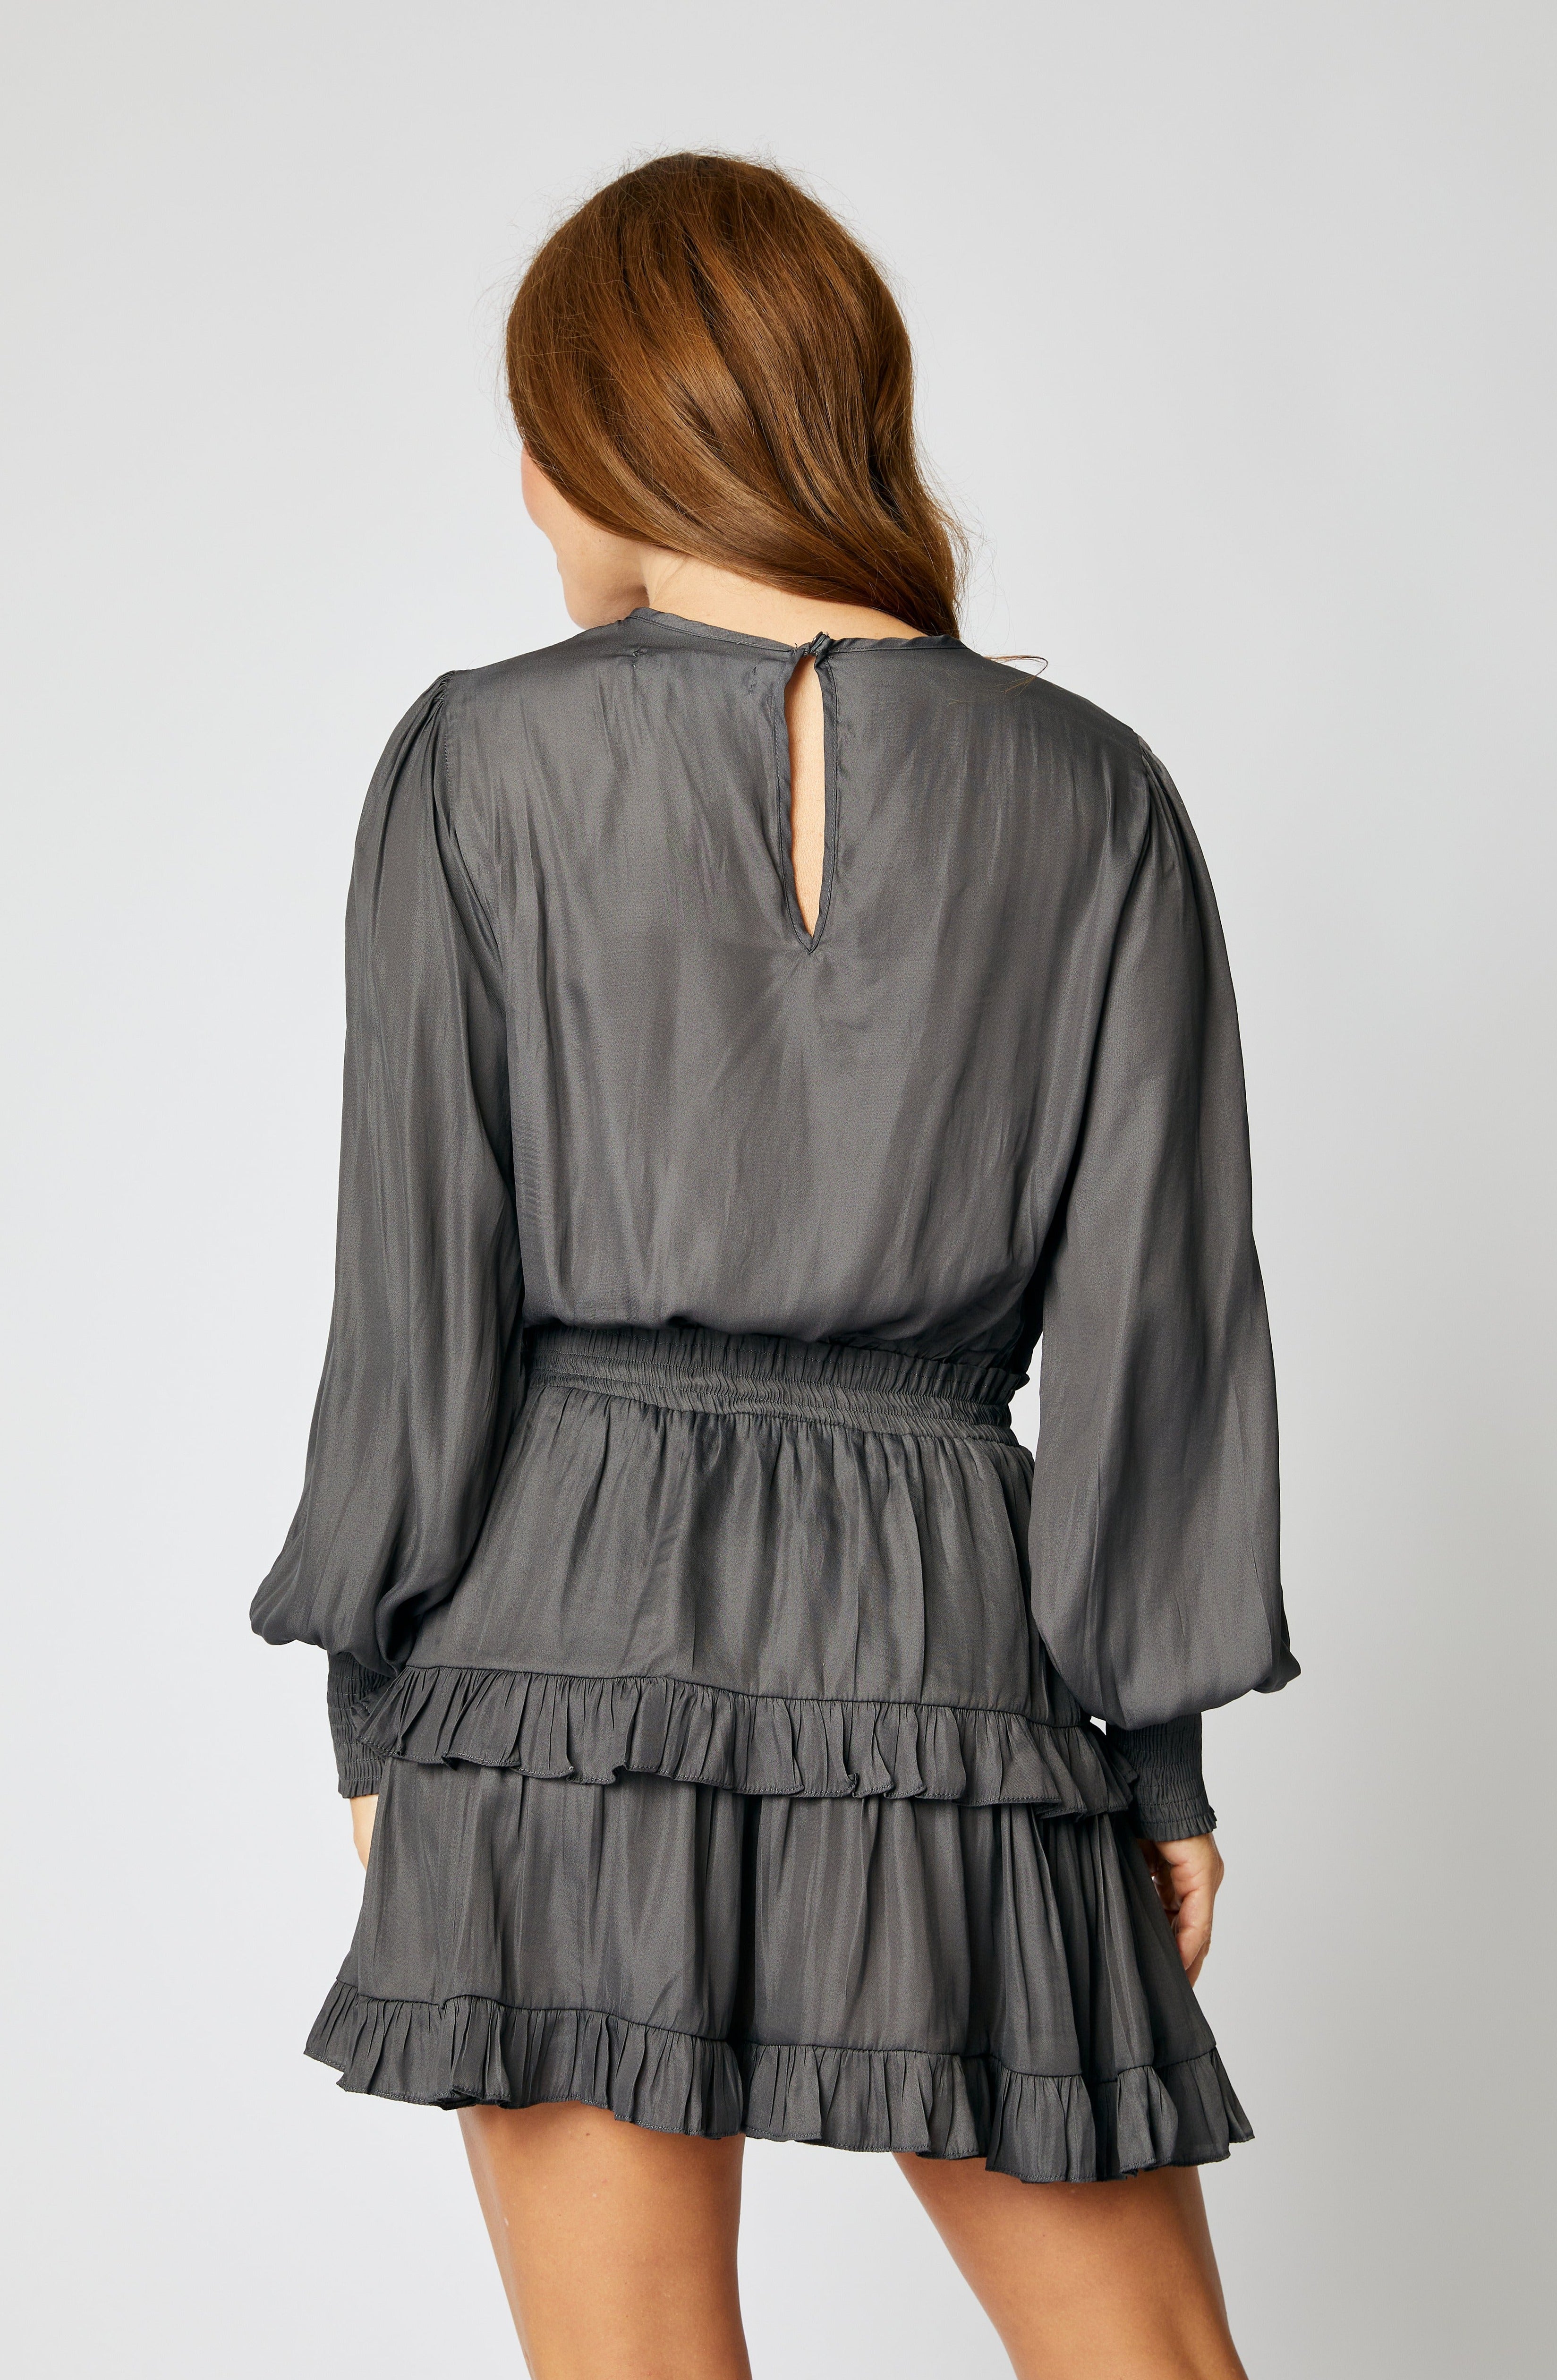 Long Sleeve Dress w/ Double Layer - Jacqueline B Clothing